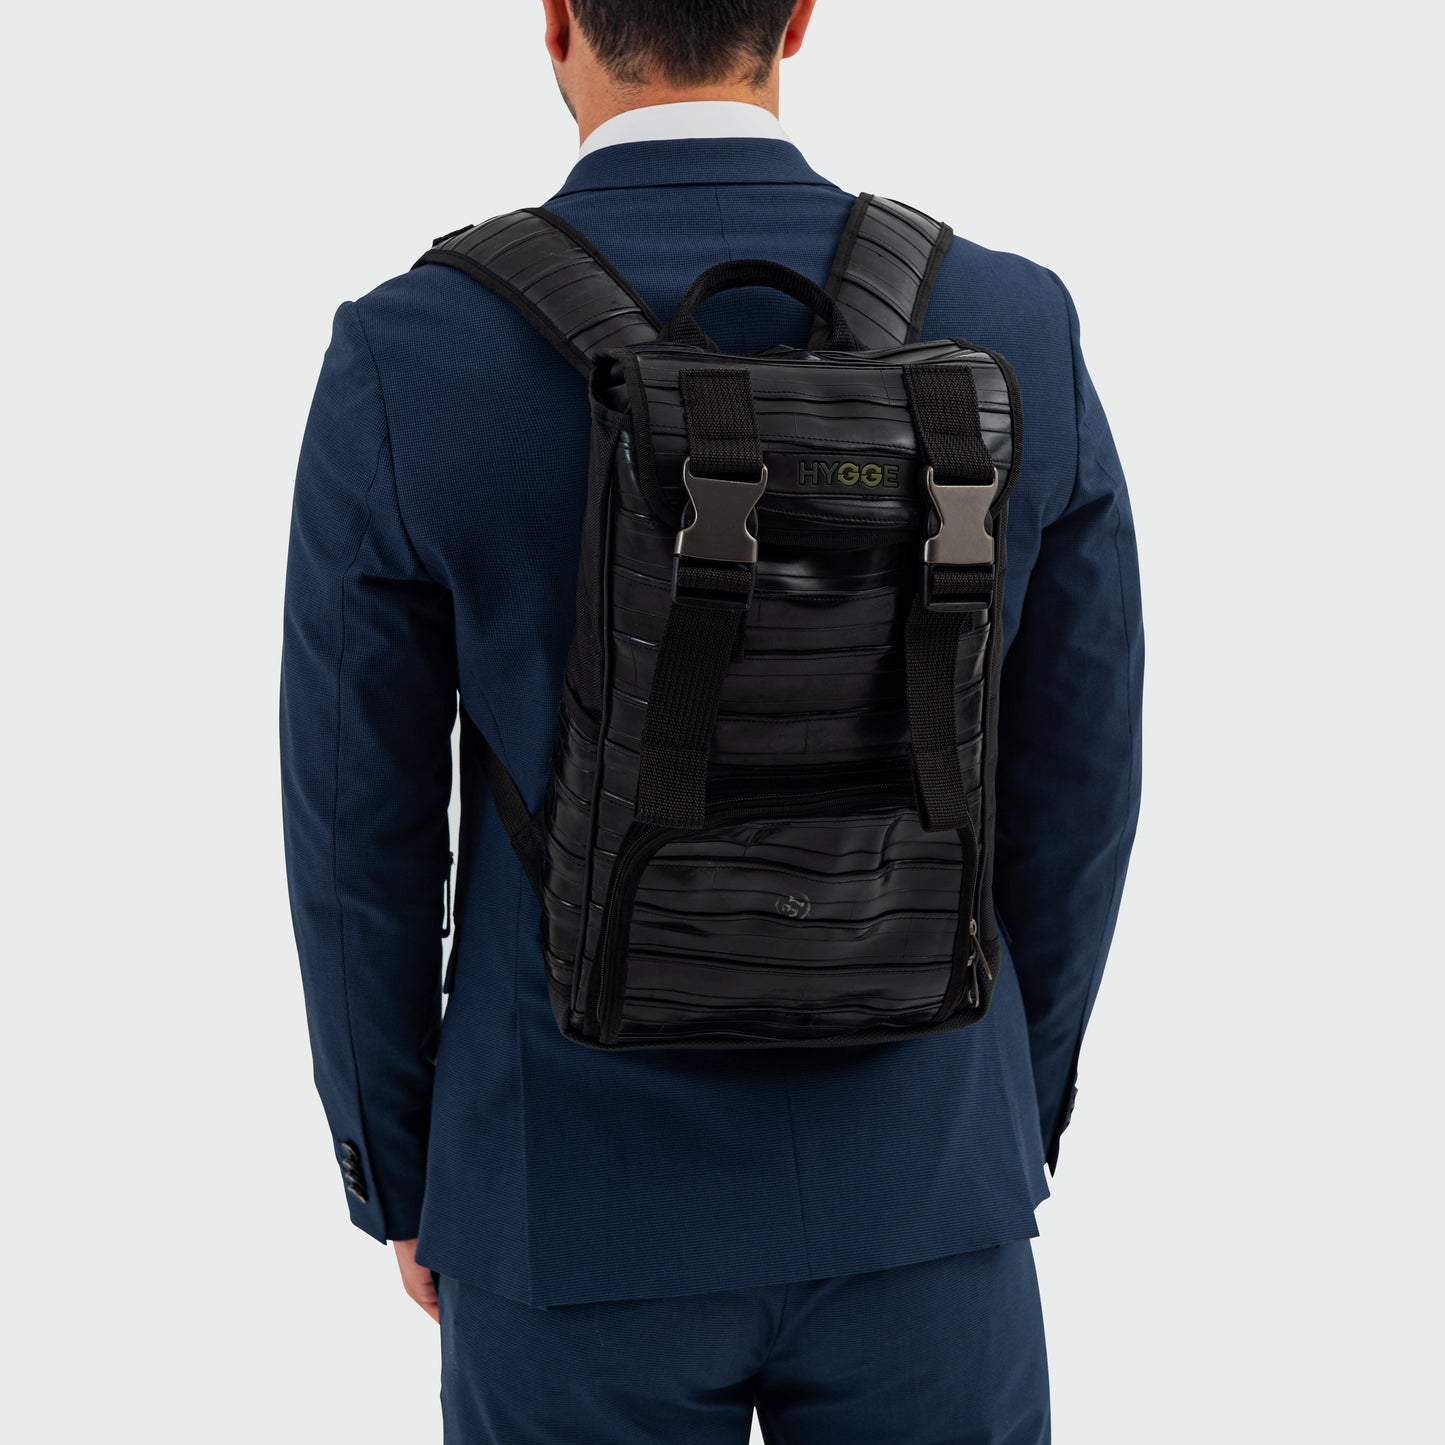 Backpack 3RW